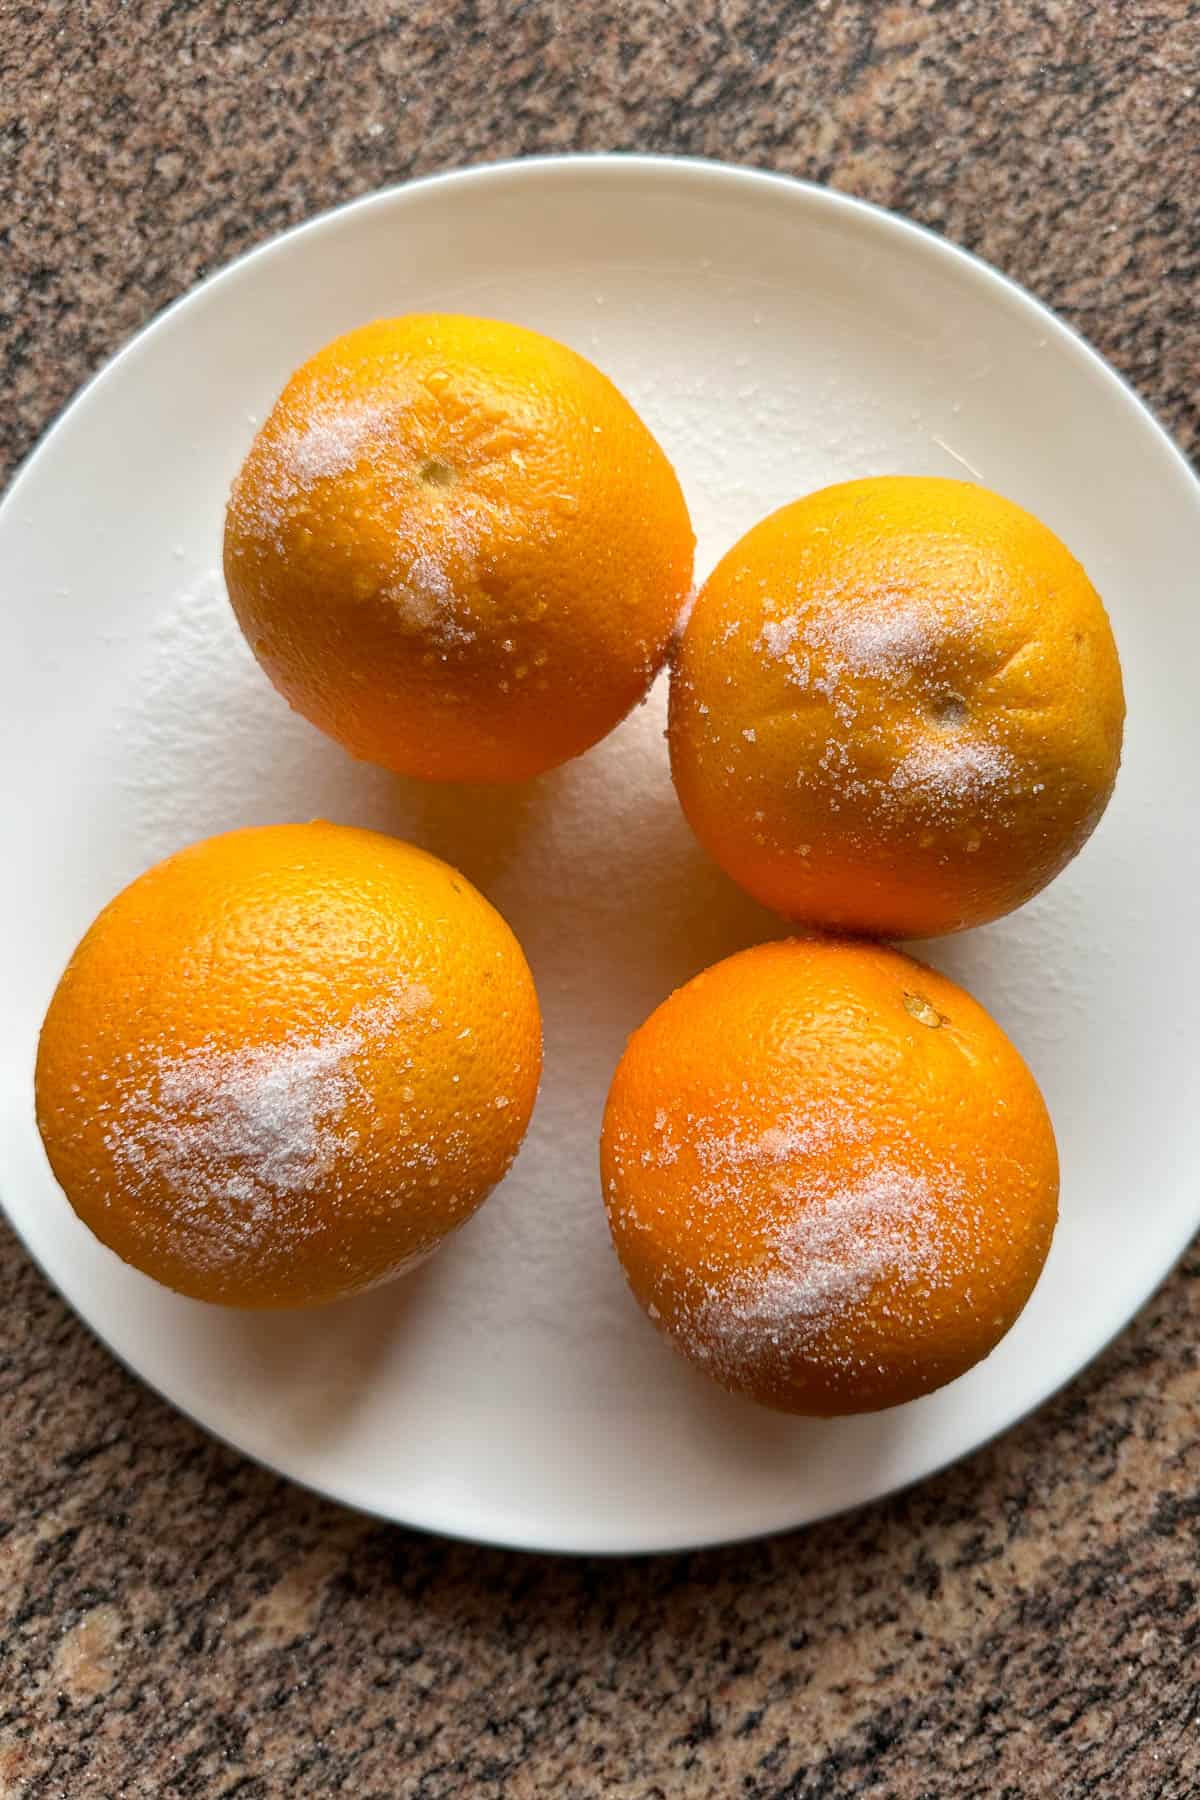 Four oranges (sprinkled with salt) on a plate.